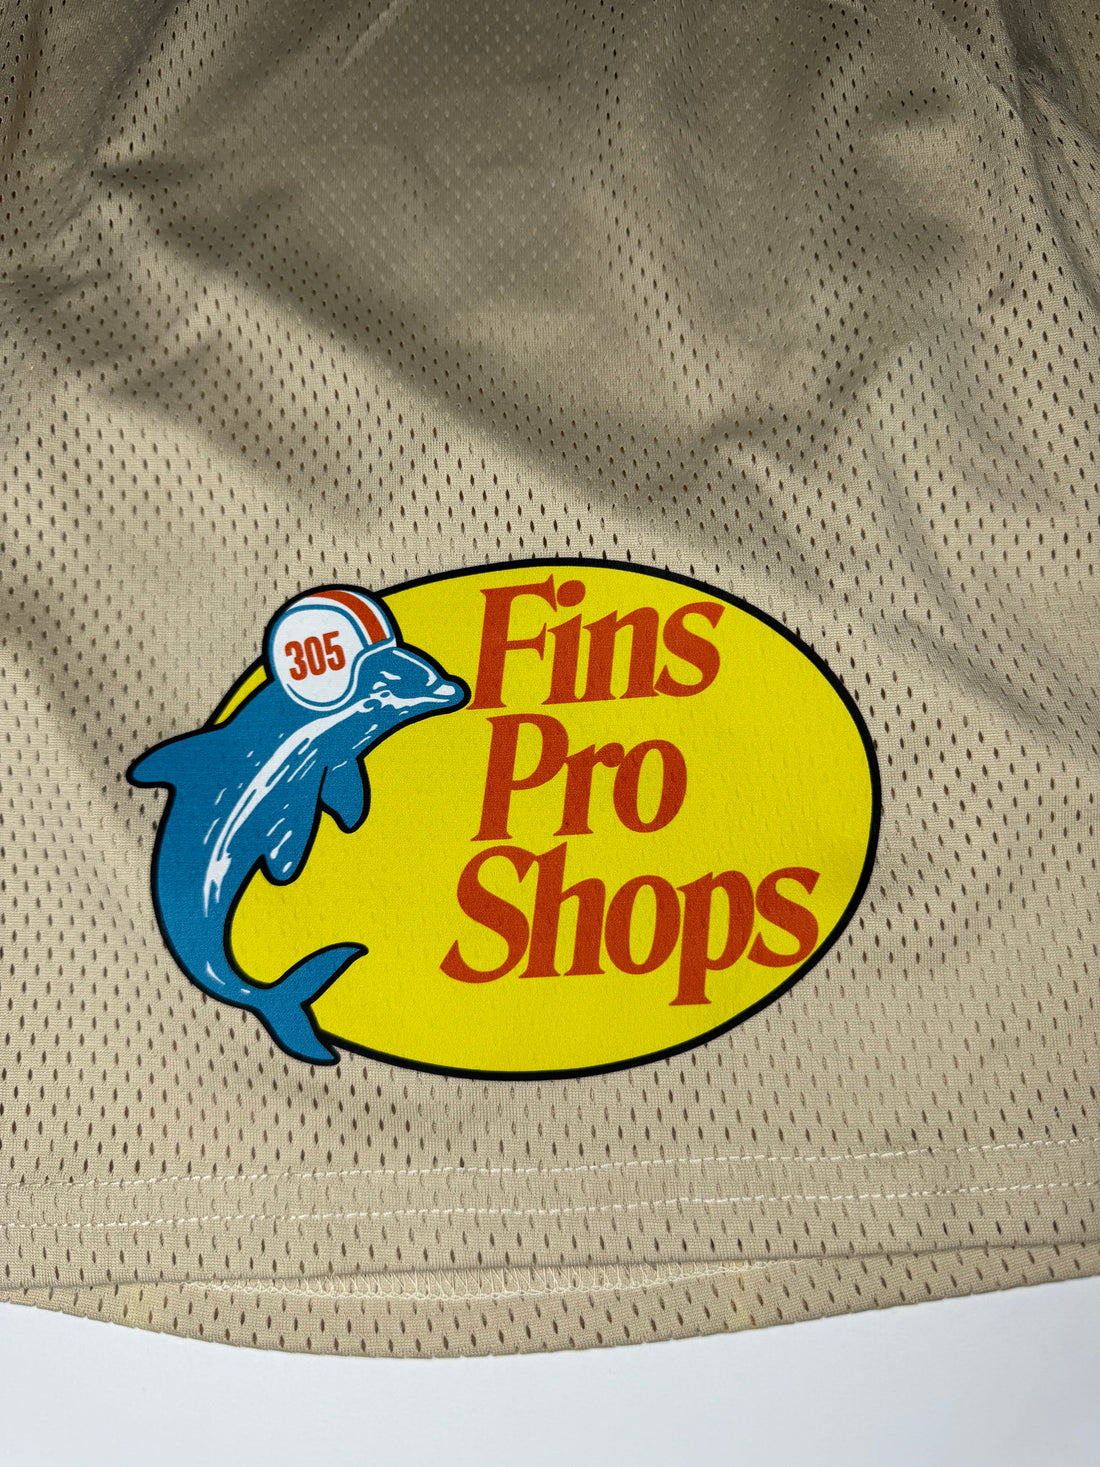 Fins Pro Shops Mesh Shorts